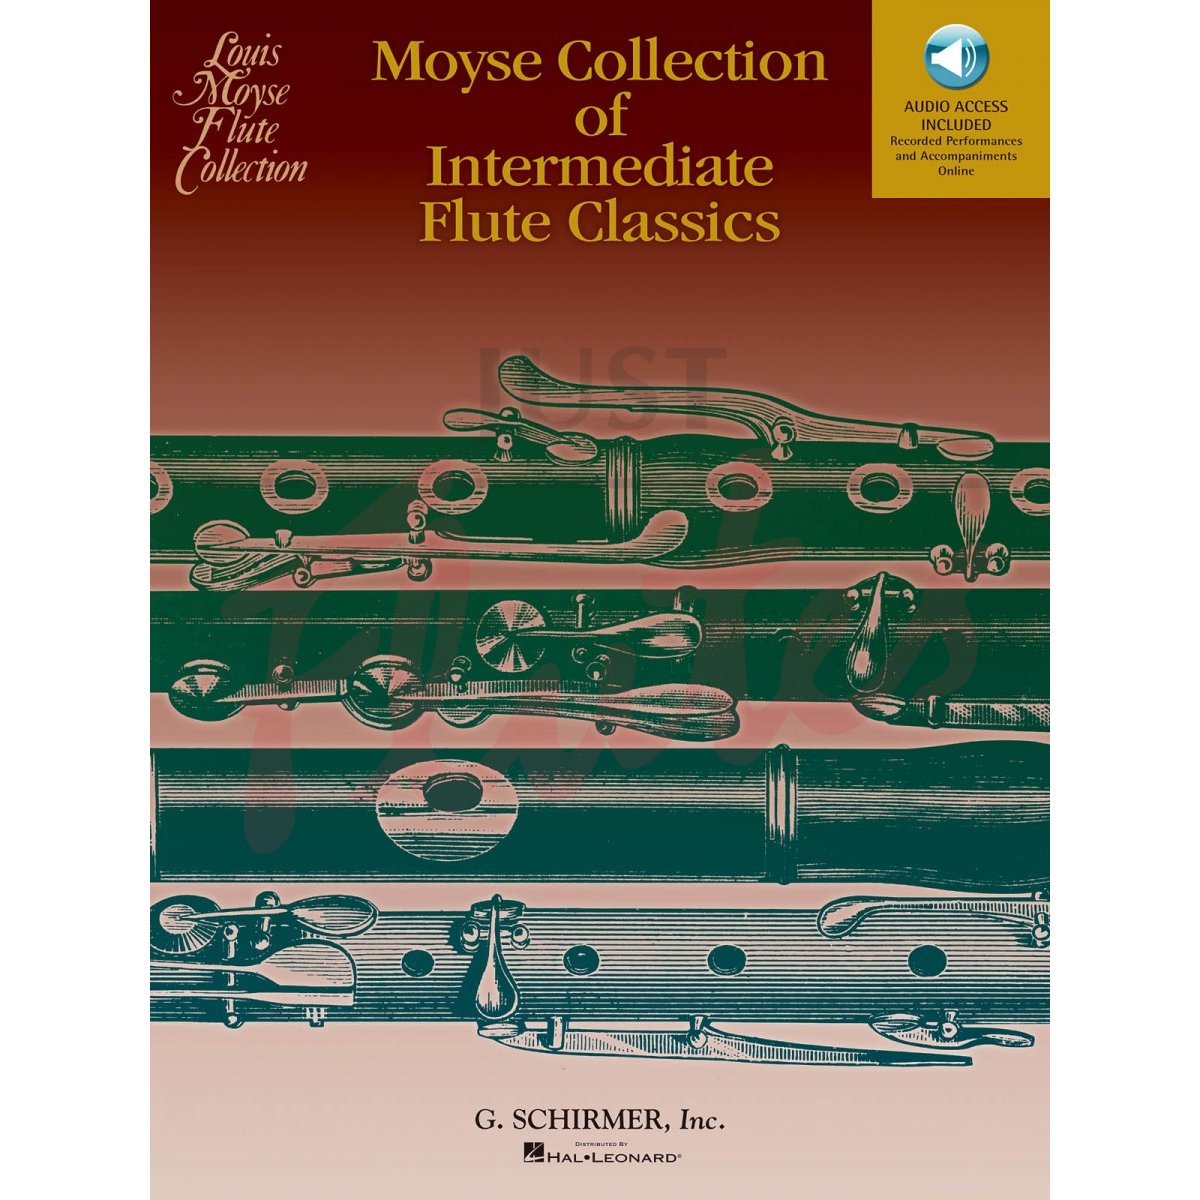 Moyse Collection of Intermediate Flute Classics